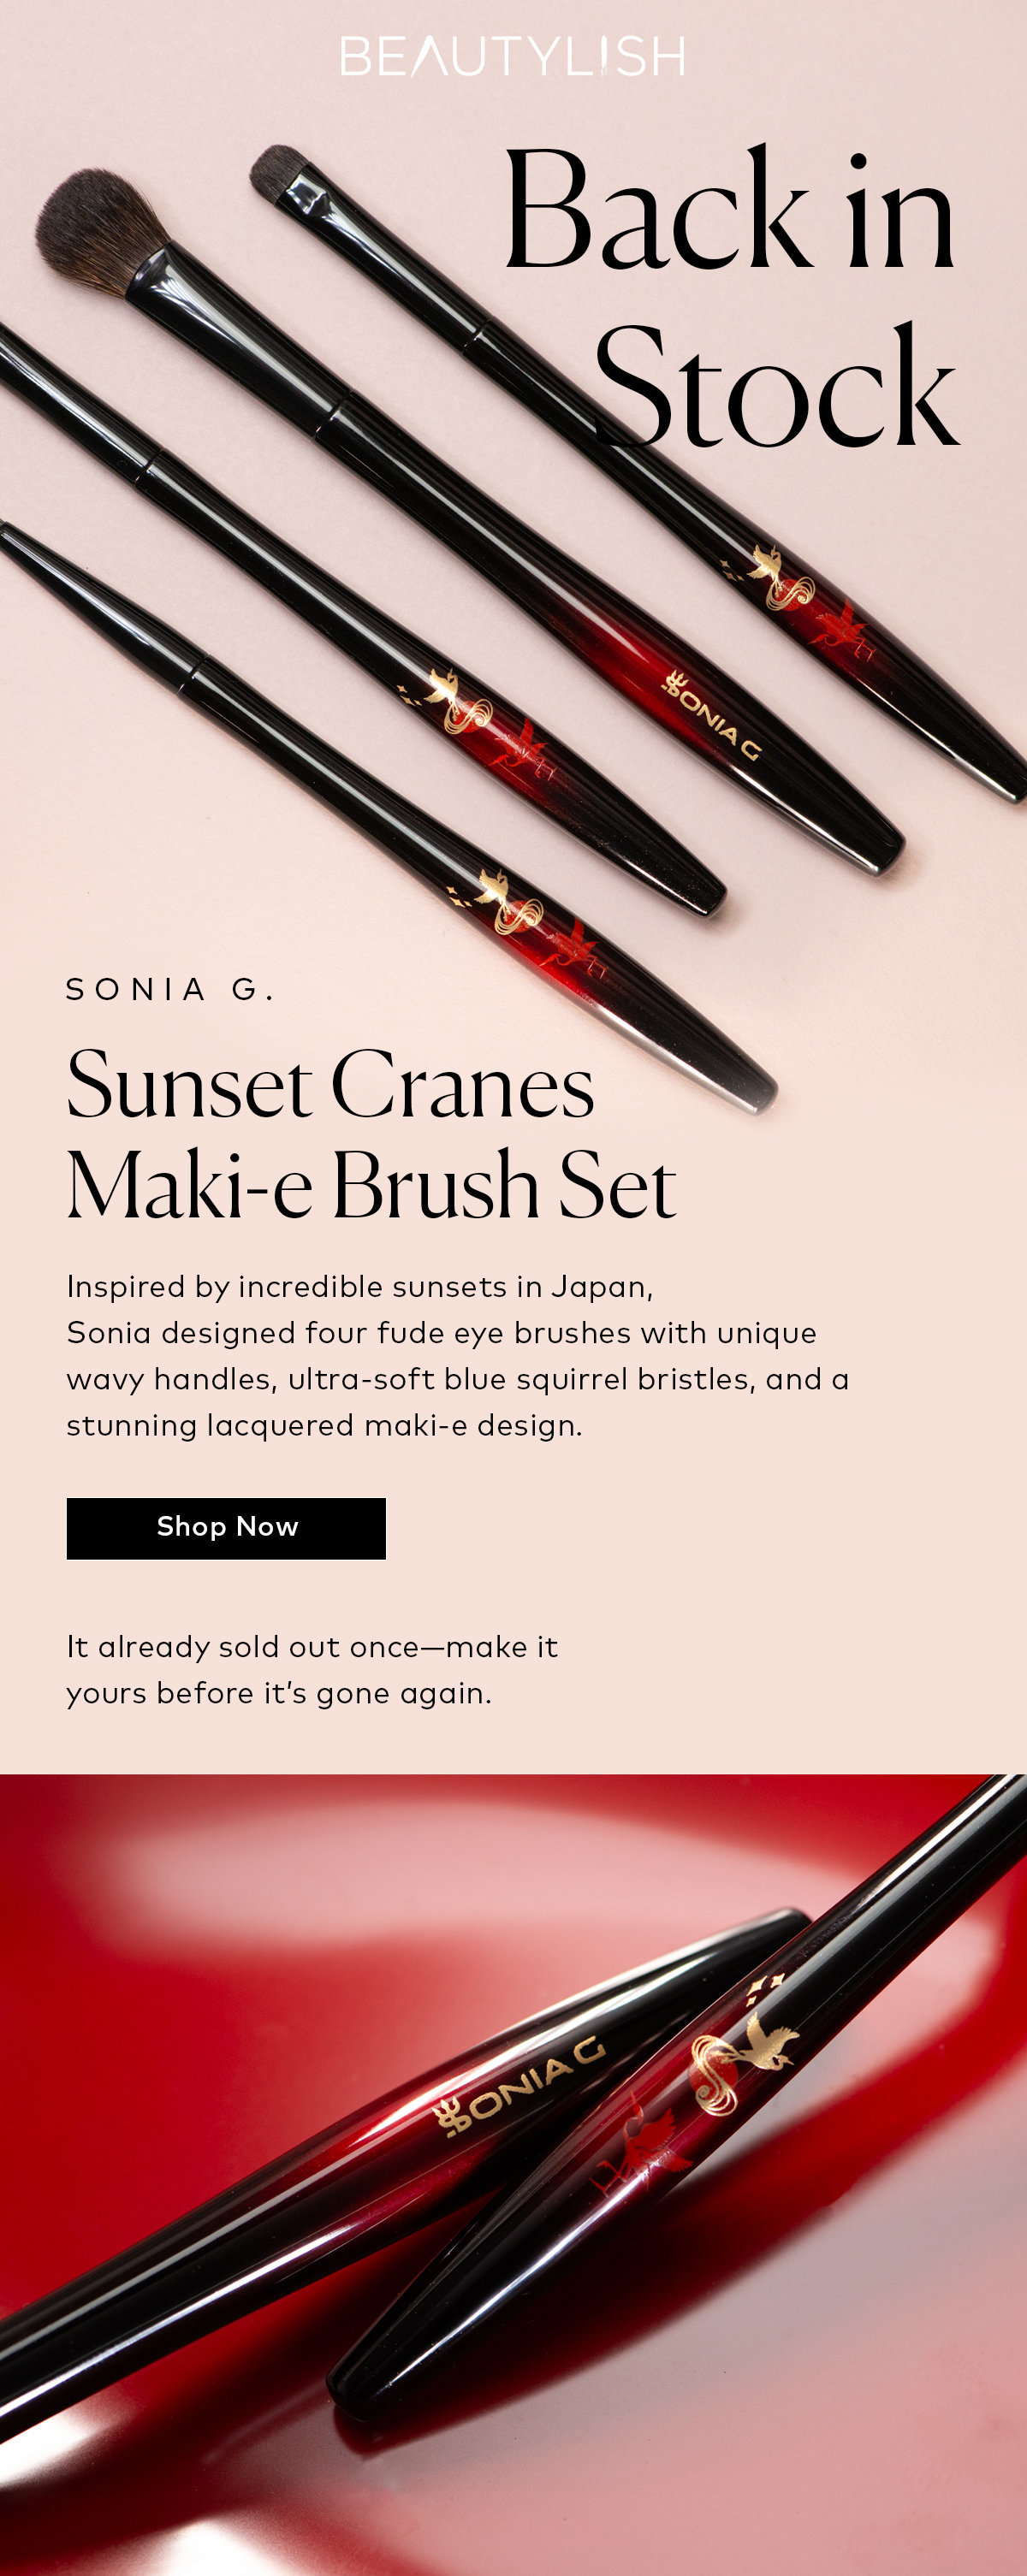 Sonia G.’s Sunset Cranes Maki-e Brush Set is back in stock at Beautylish.com